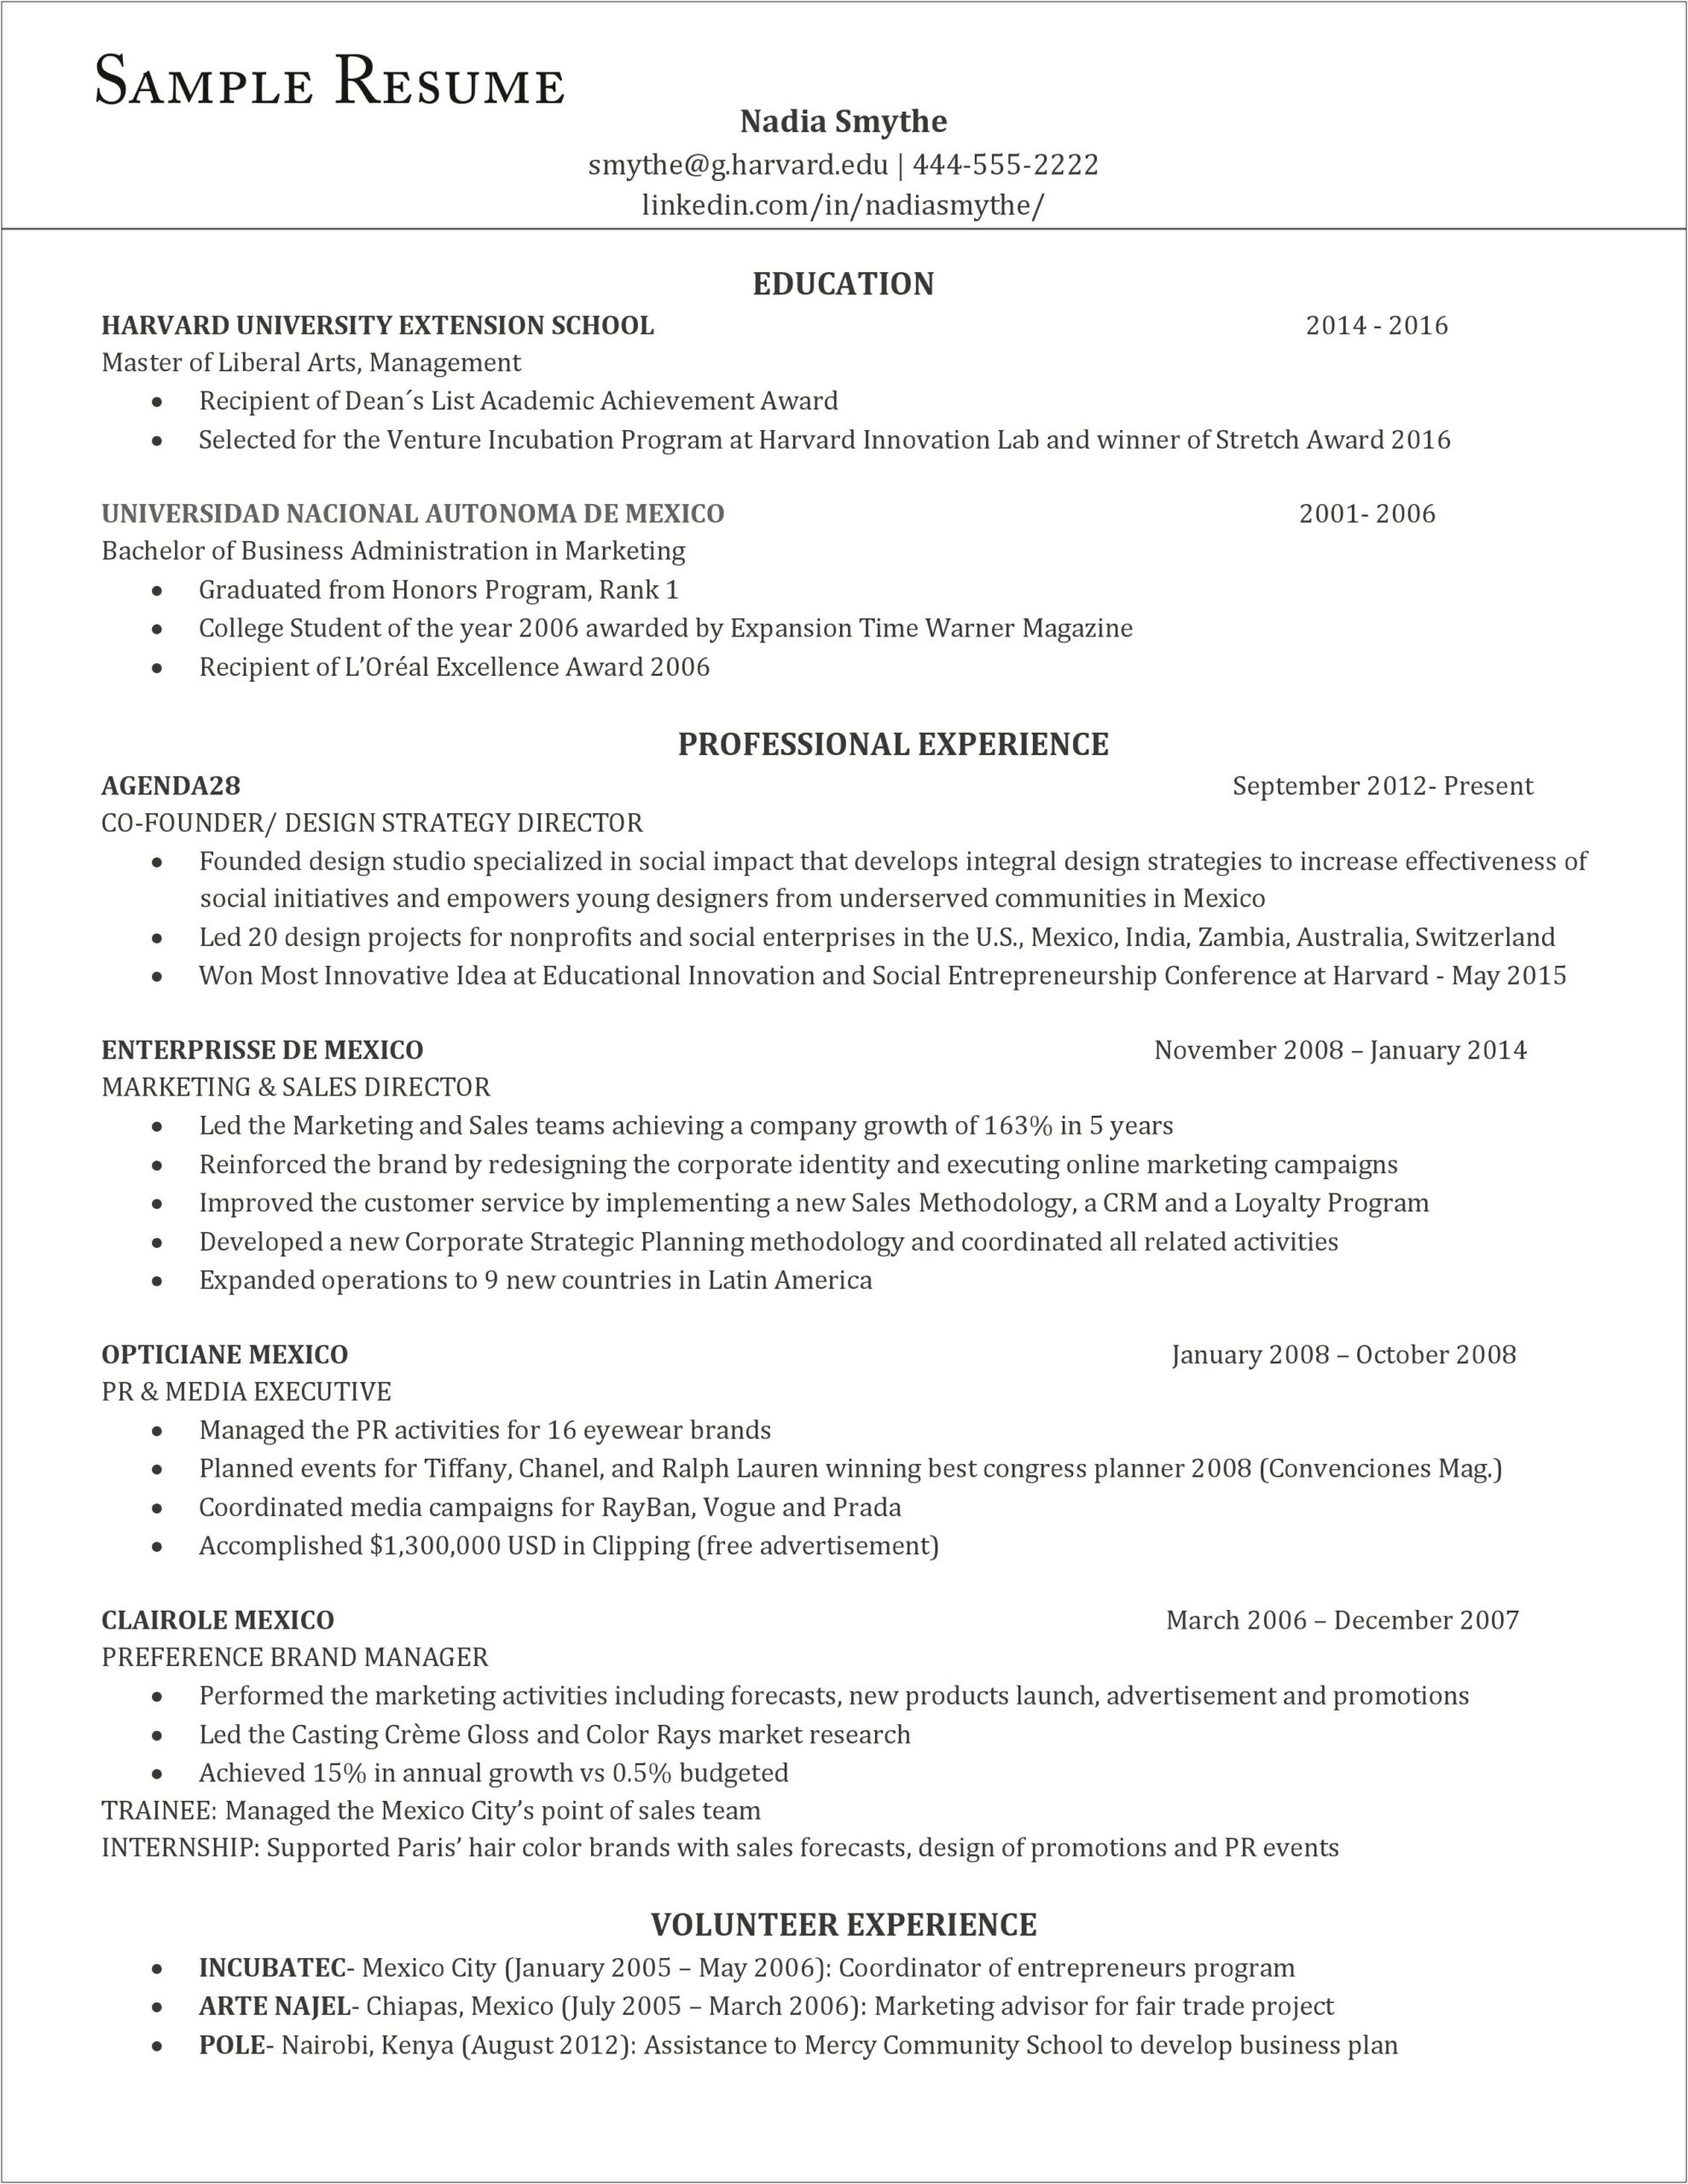 List Current School On Resume Present